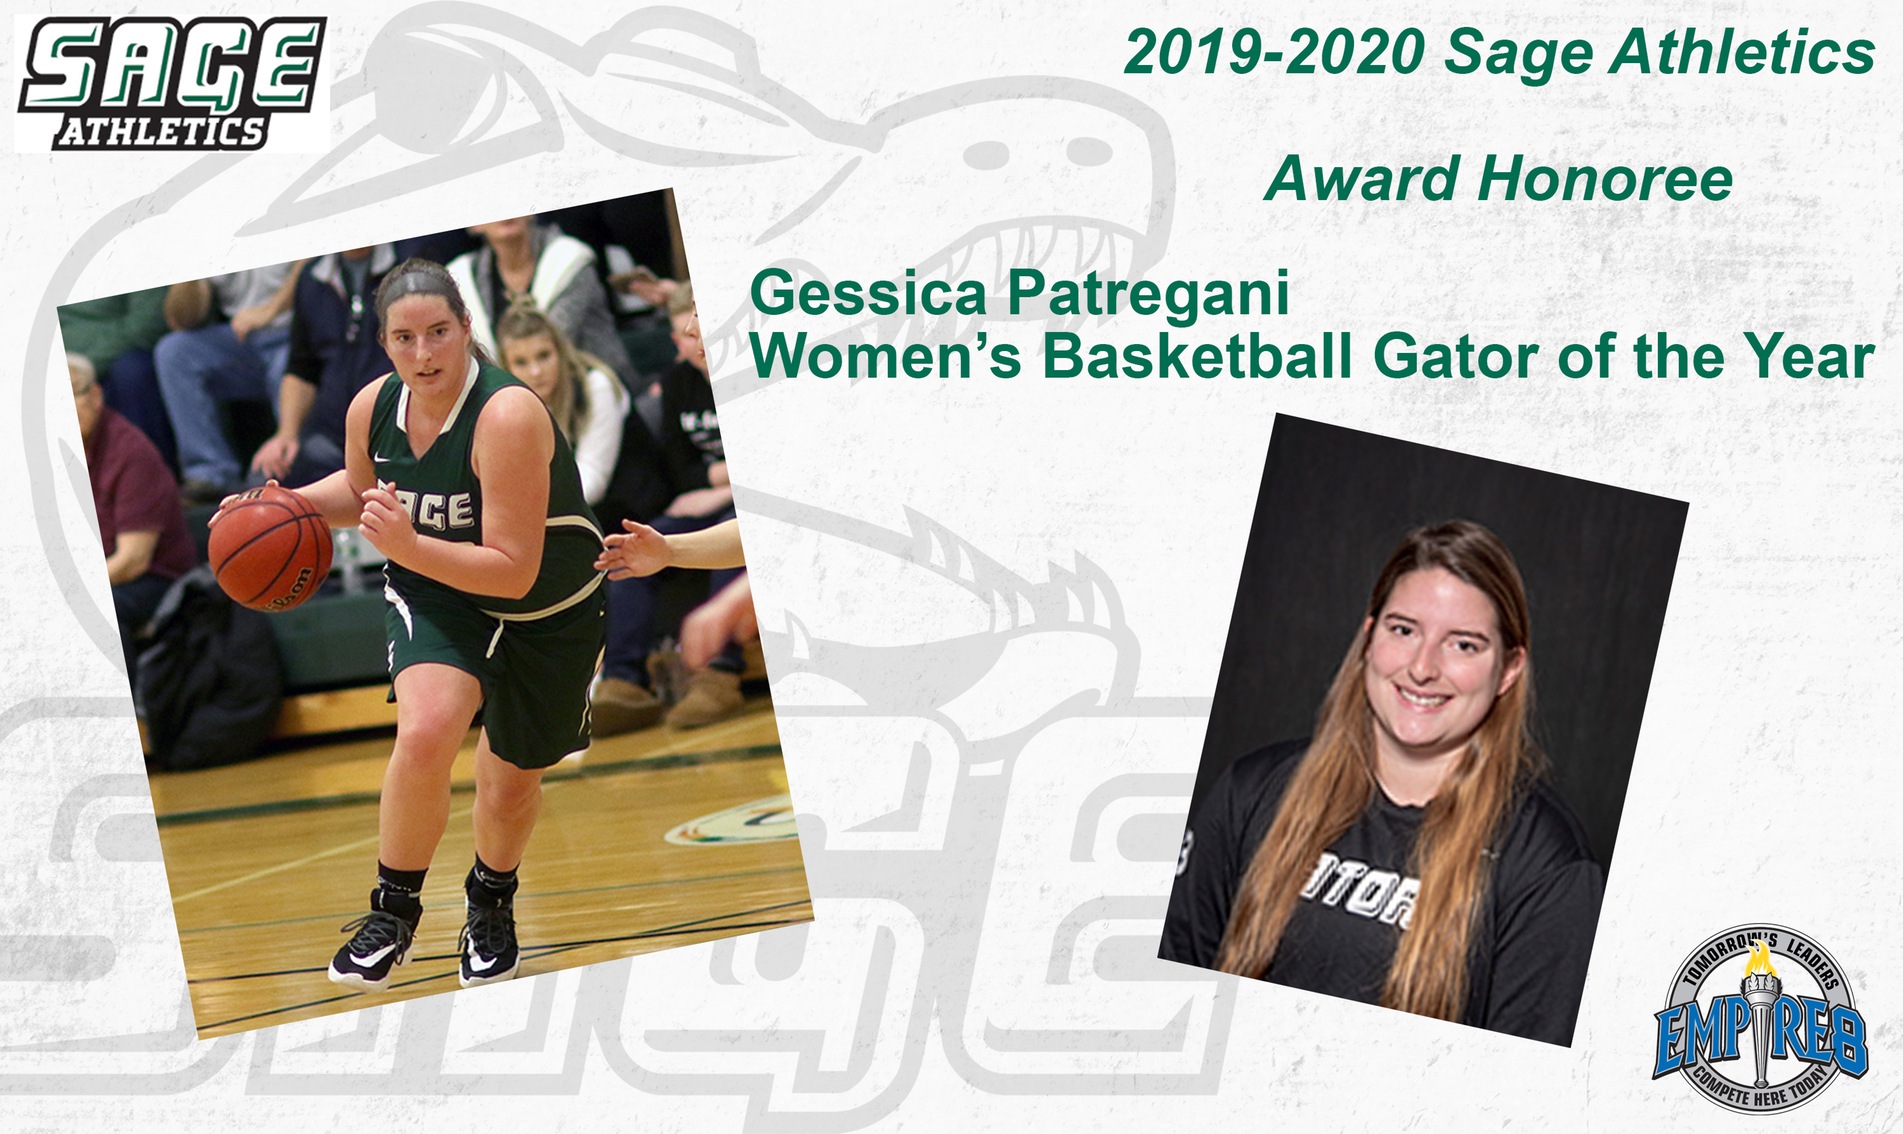 Gess Patregnani named women's basketball Gator Award winner